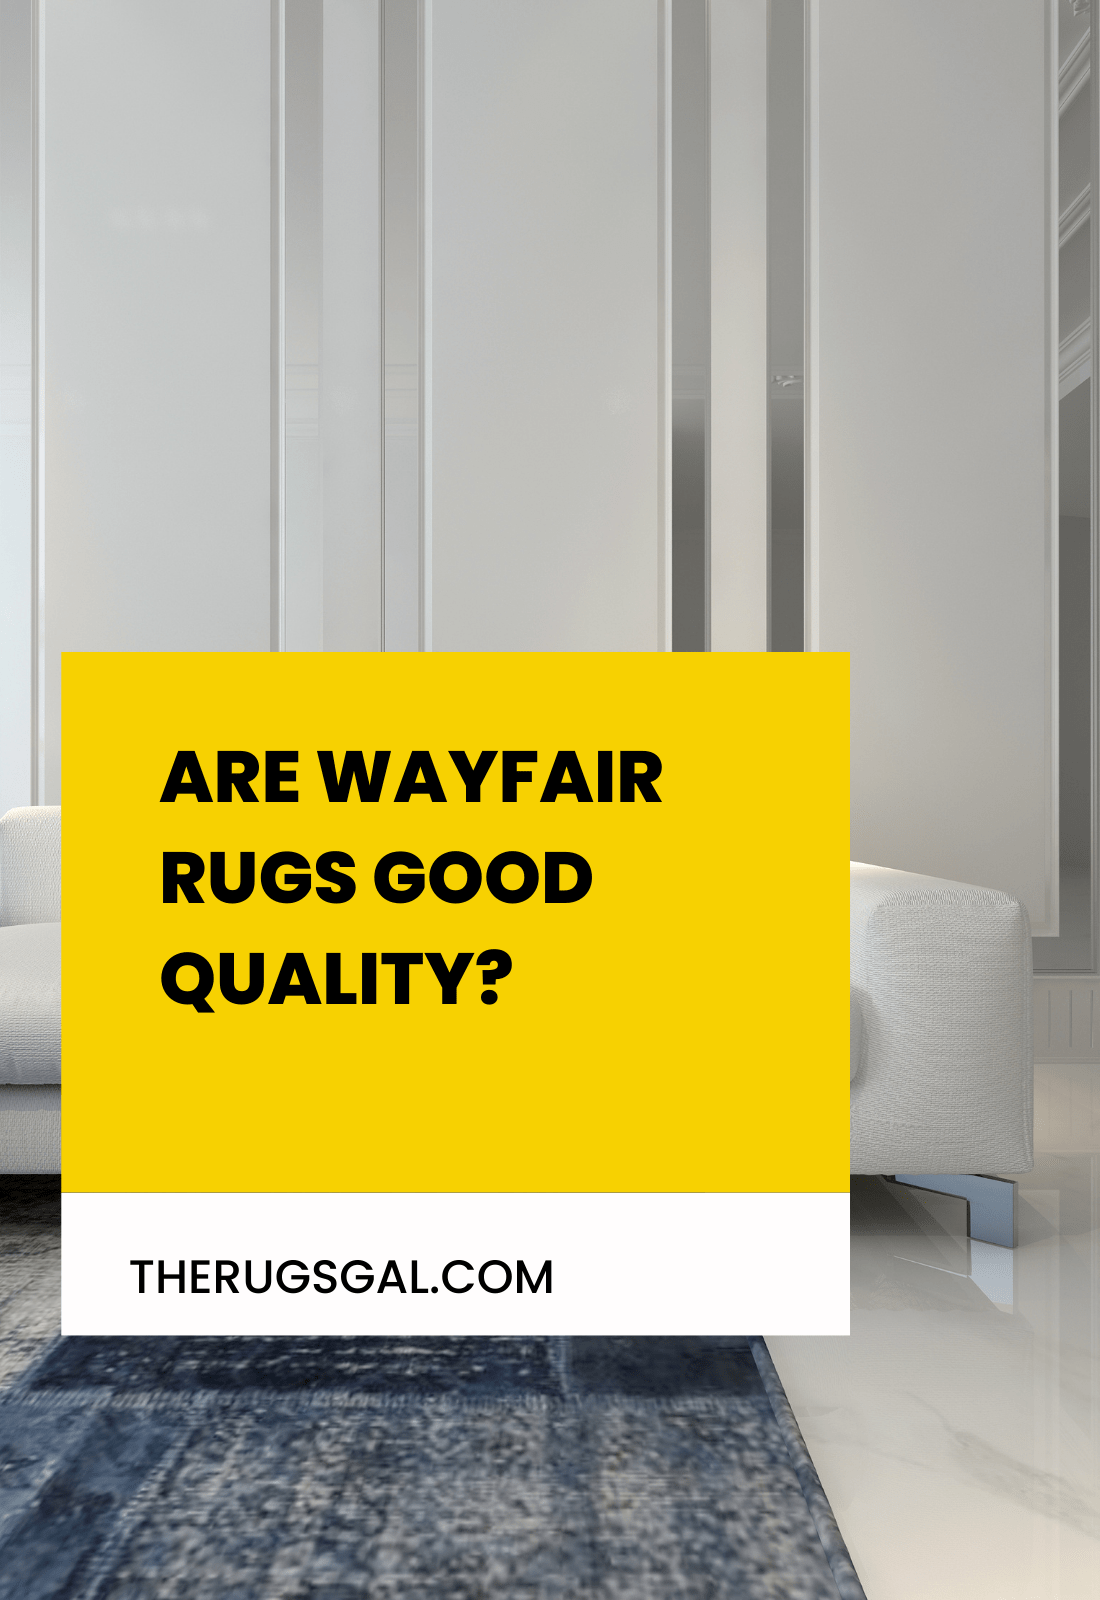 Are Wayfair Rugs Good Quality?